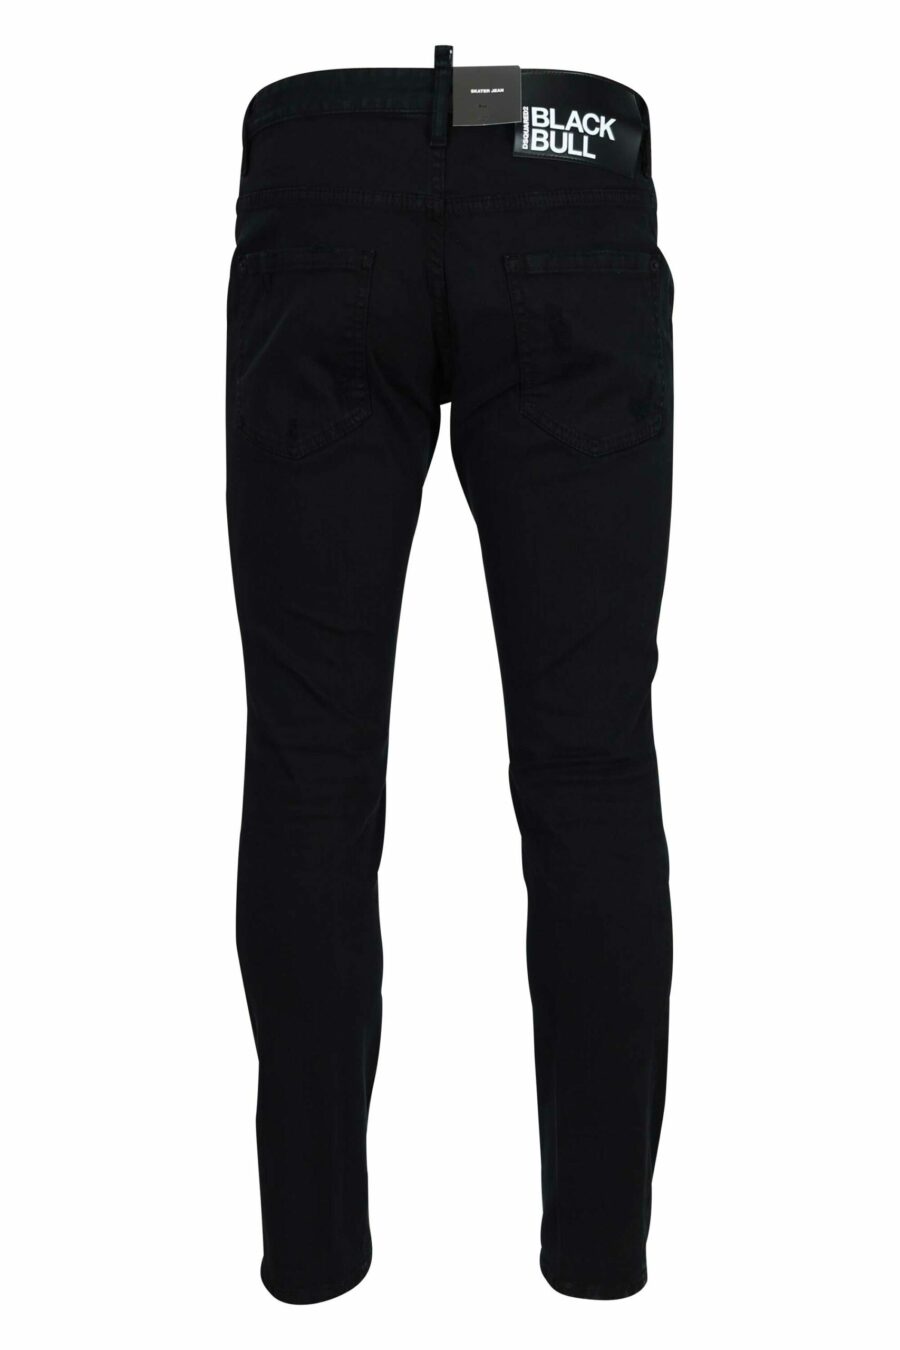 Black "skater jean" jeans with logo - 8054148472320 2 scaled